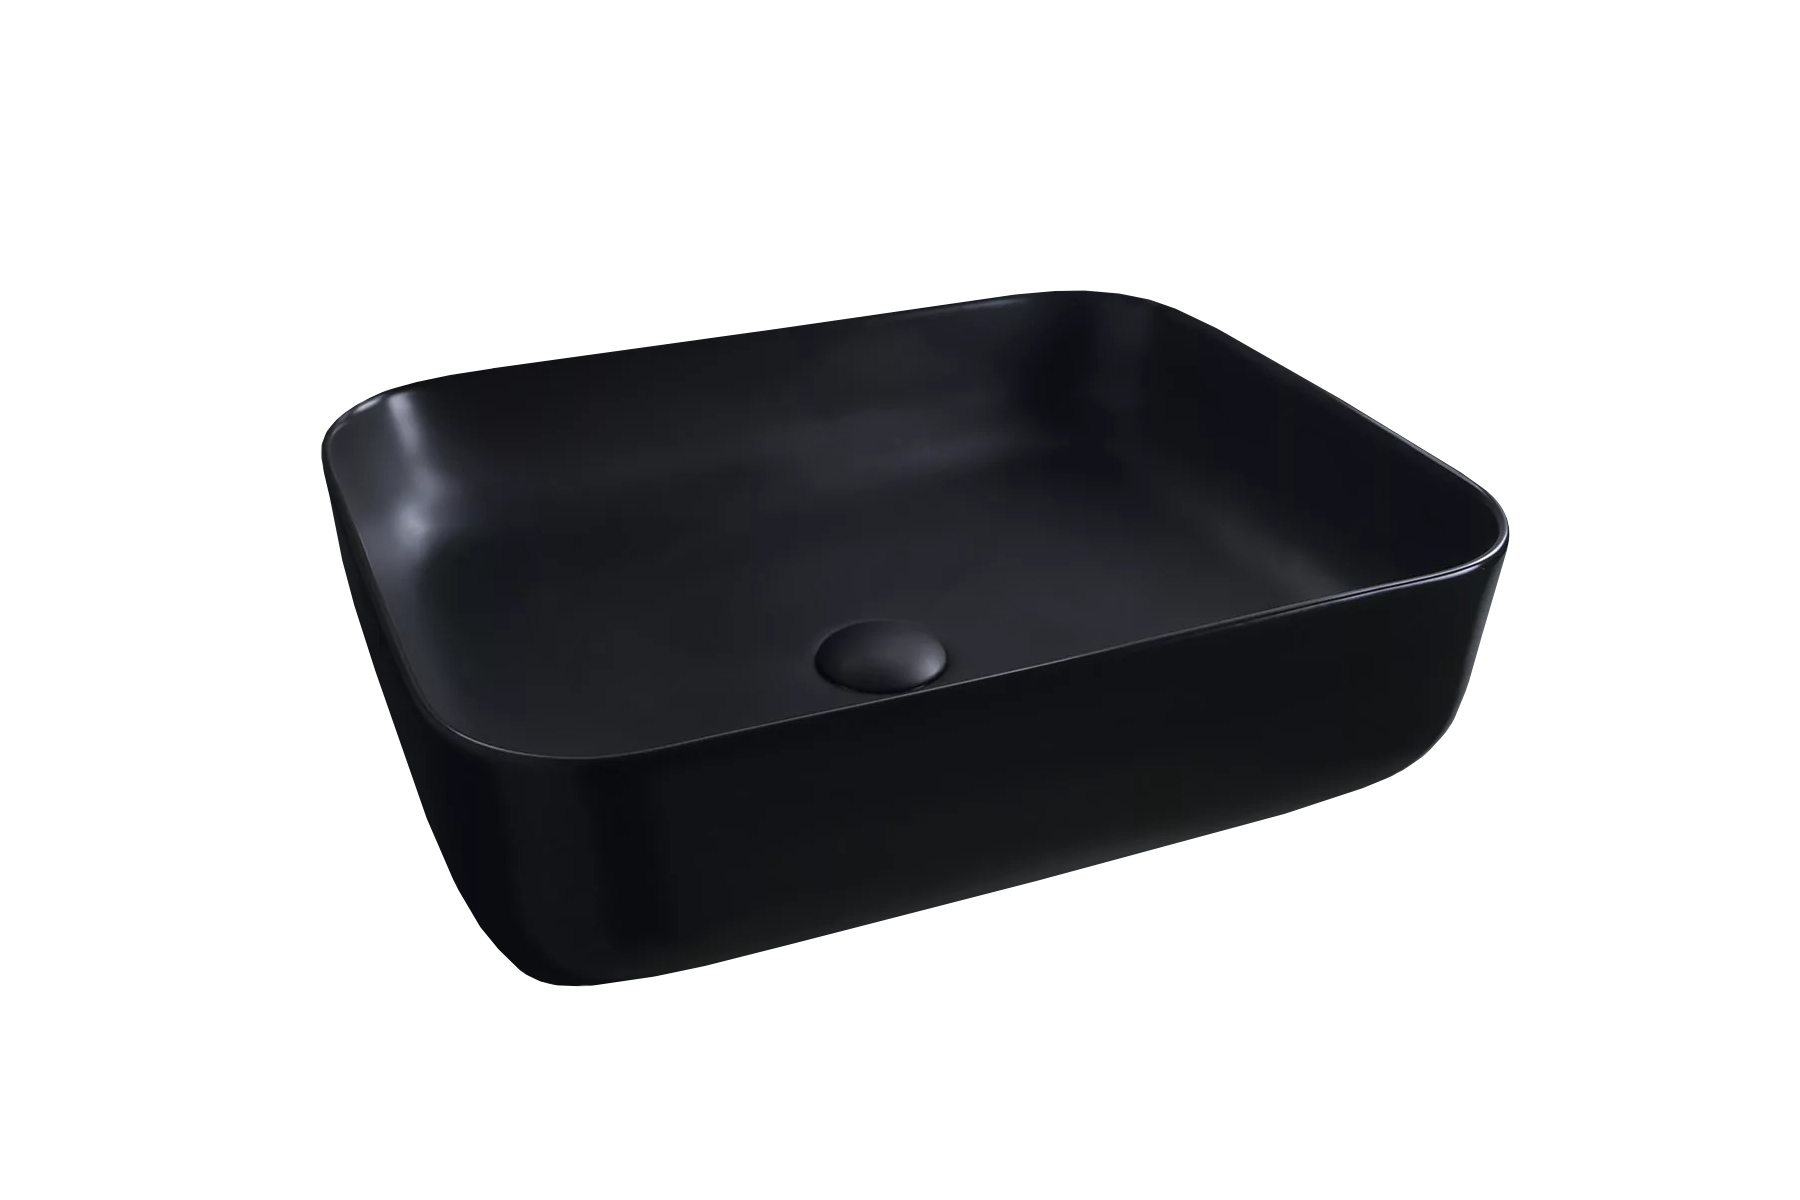 накладная черная раковина для ванной gid n9302bg овальная керамческая Накладная раковина для ванной Gid Bm1304, черная матовая